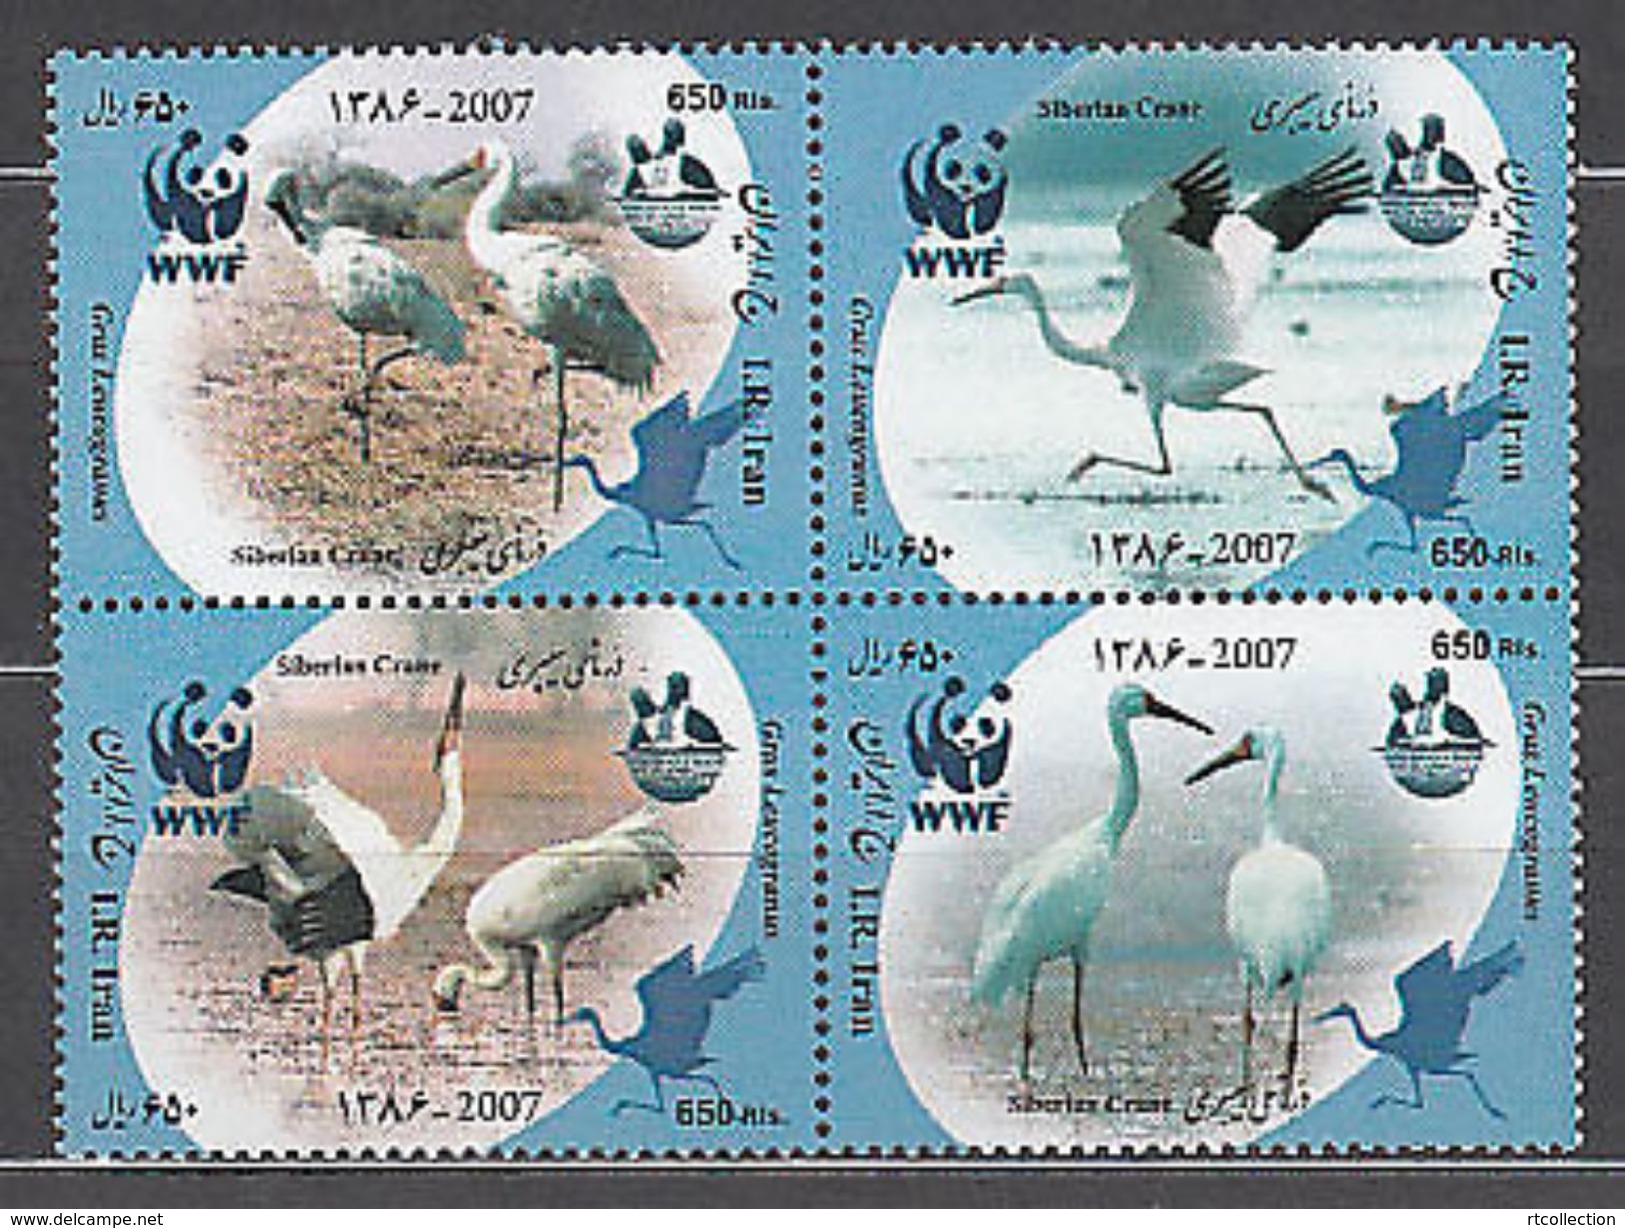 Iran 2007 Block Birds Crane Cranes Bird Animal Fauna Nature White Regionale Seberian WWF W.W.F. Stamps MNH SG 3220-23 - Cranes And Other Gruiformes